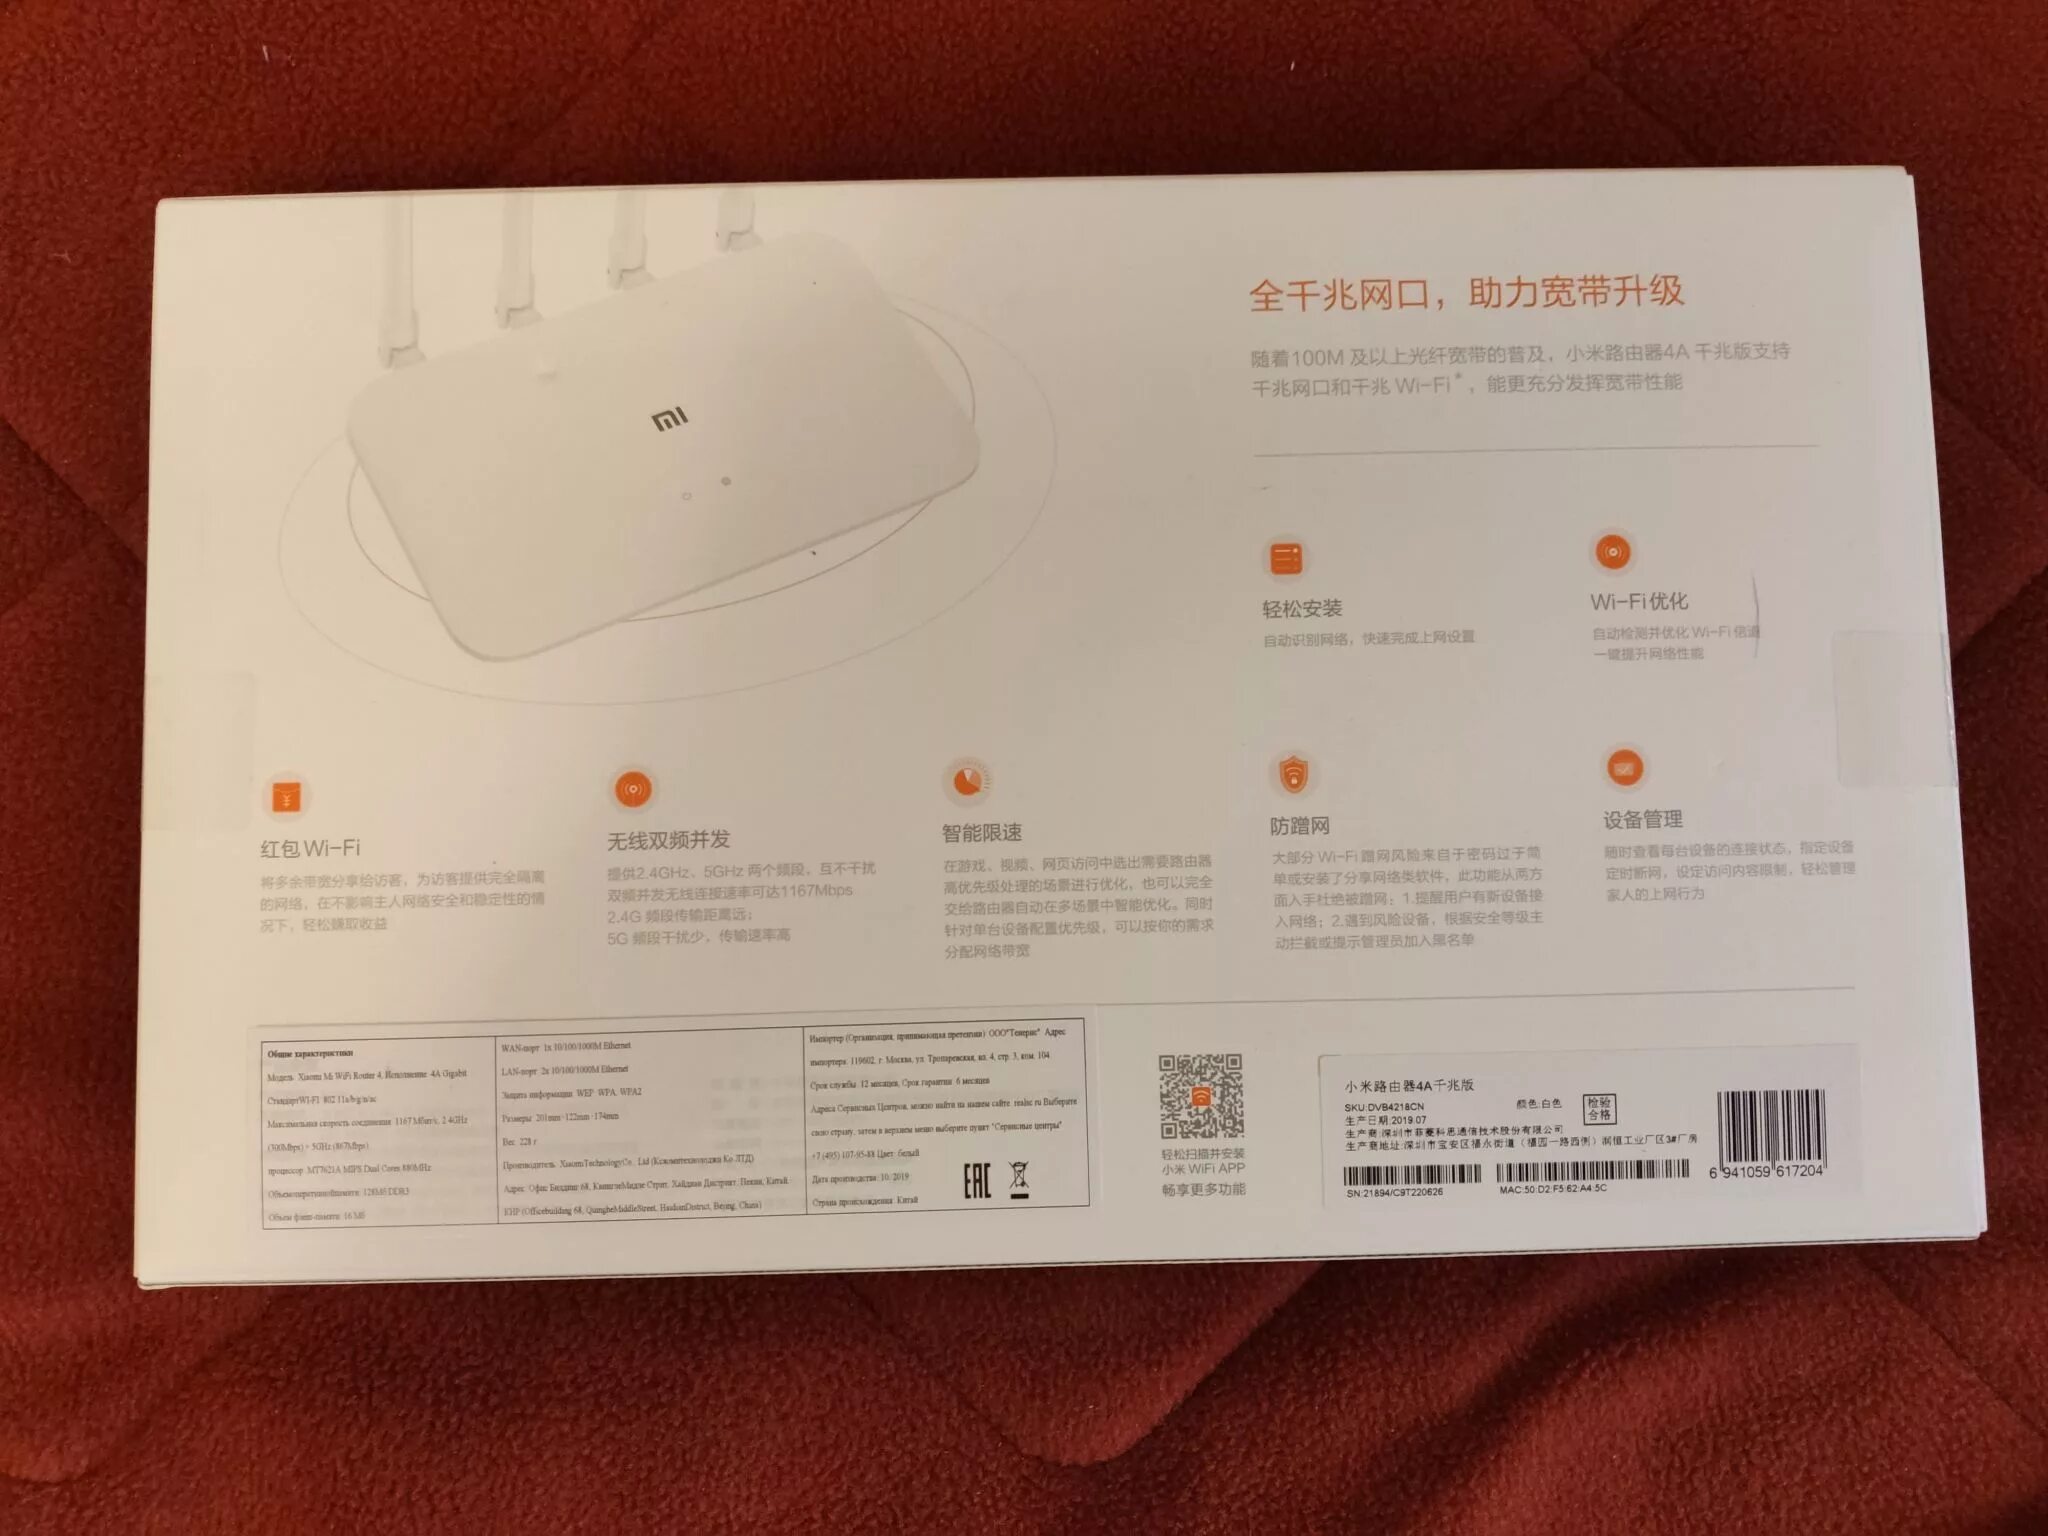 Wi-Fi роутер 4a Gigabit Edition. Xiaomi 4a роутер. Роутер Xiaomi 4a Gigabit. Xiaomi mi WIFI Router 4a Gigabit Edition.